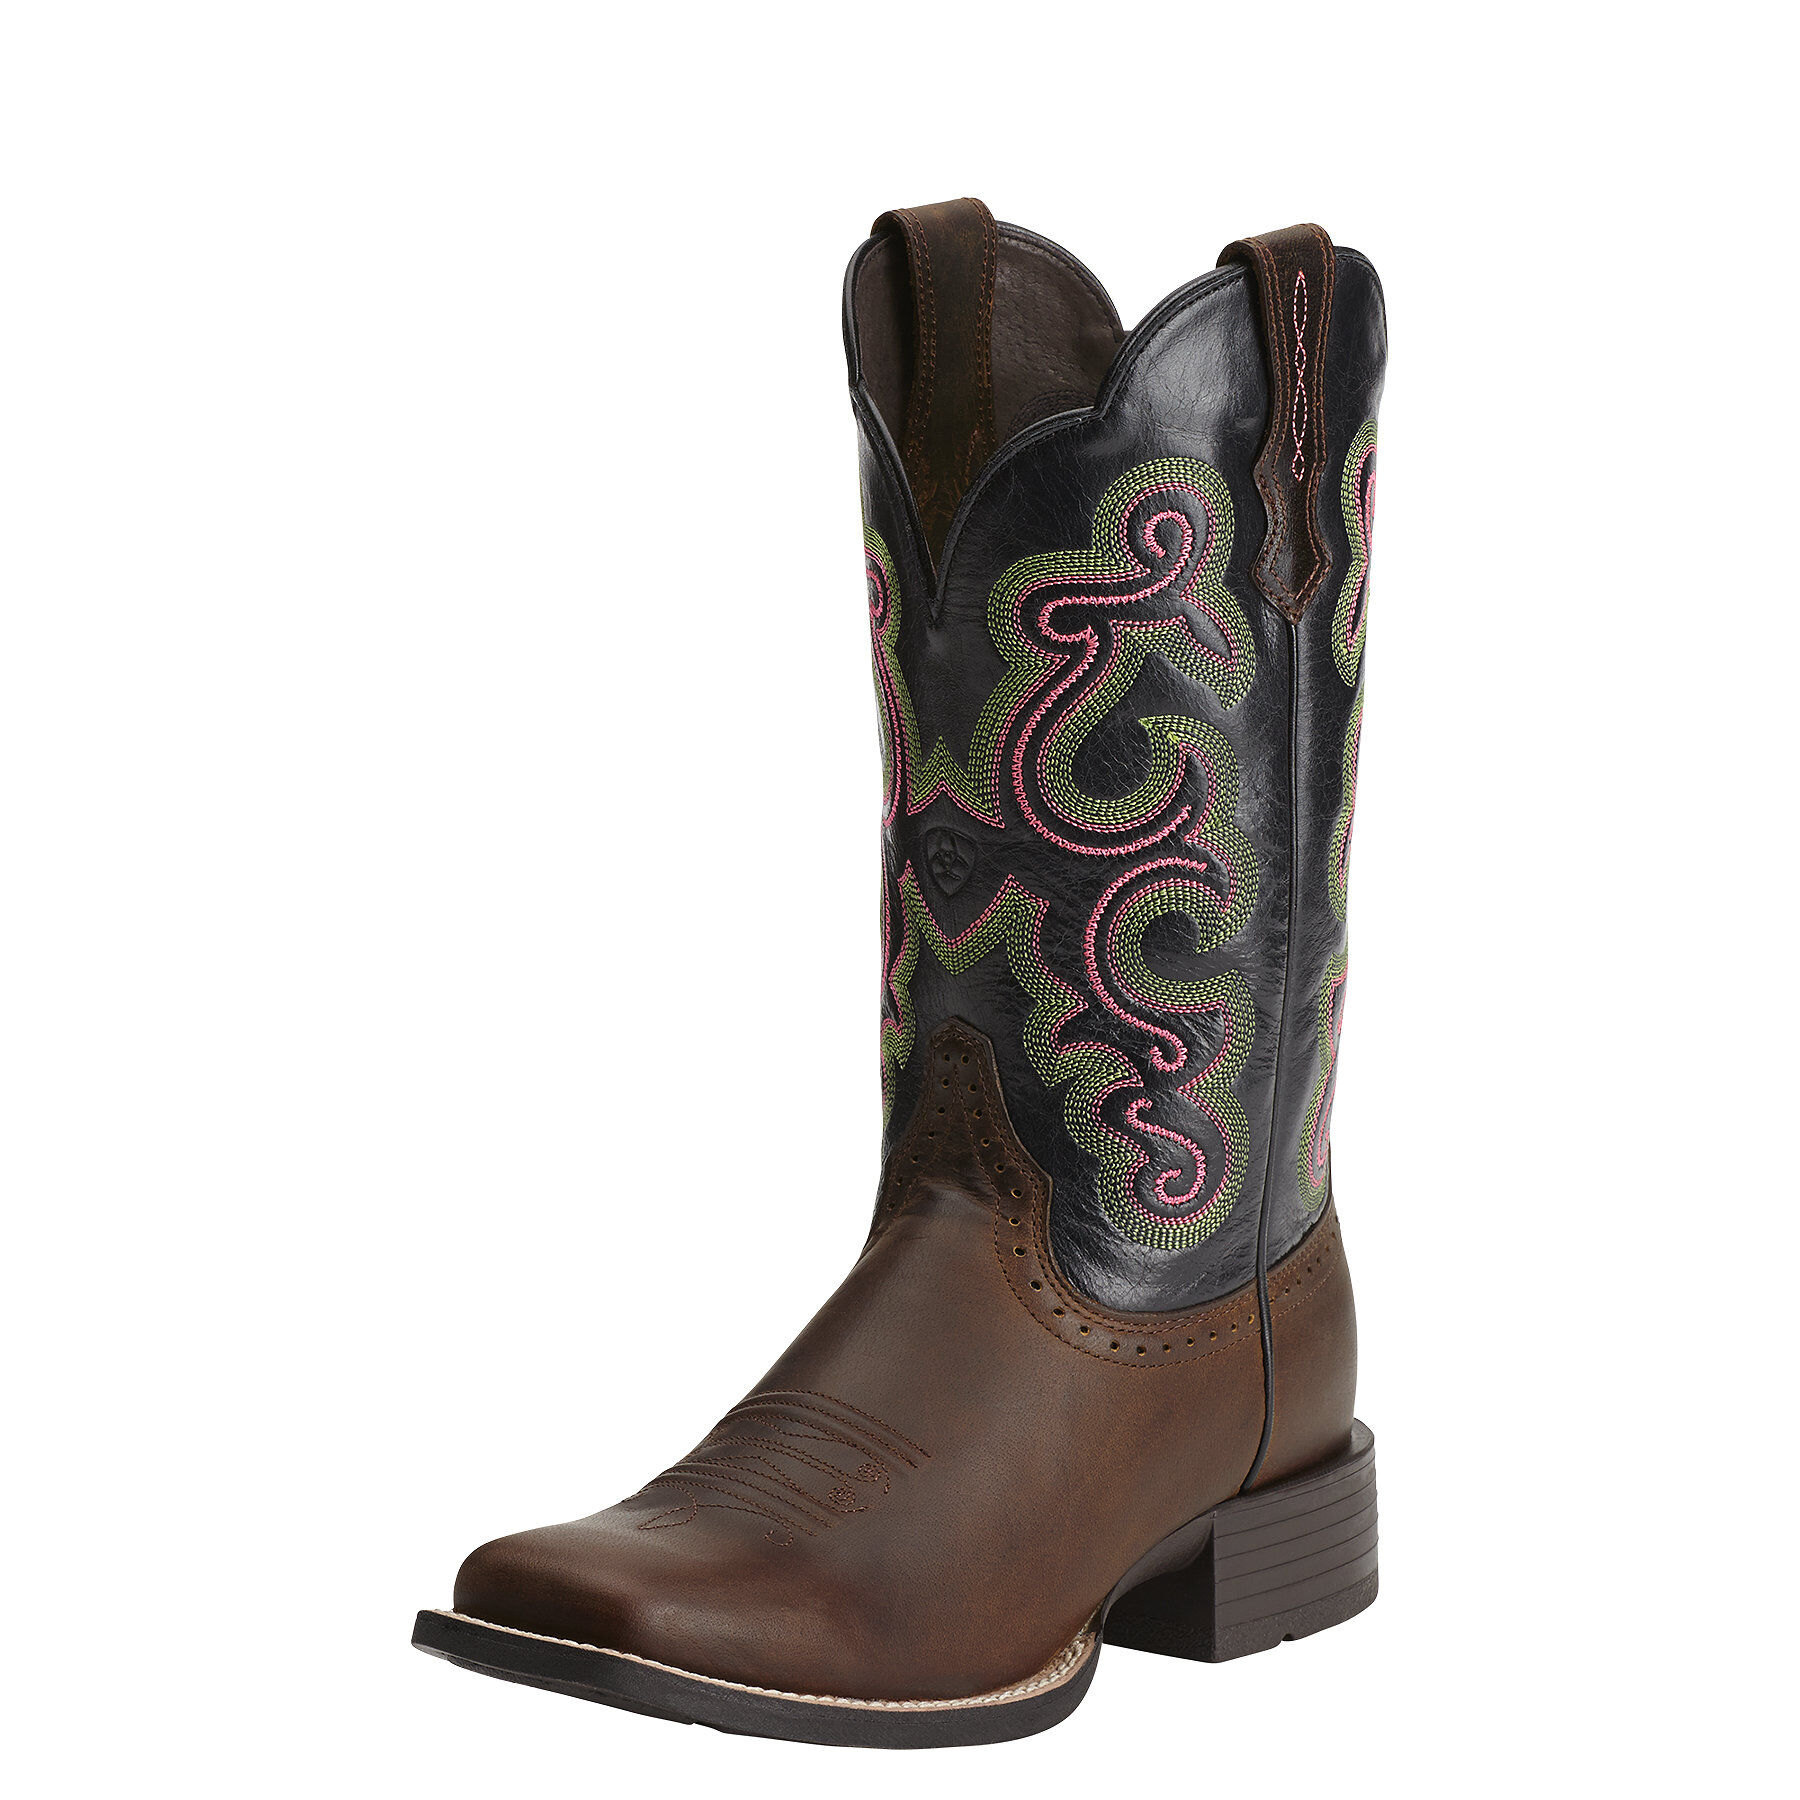 Ariat Cowboy Boots Size Chart